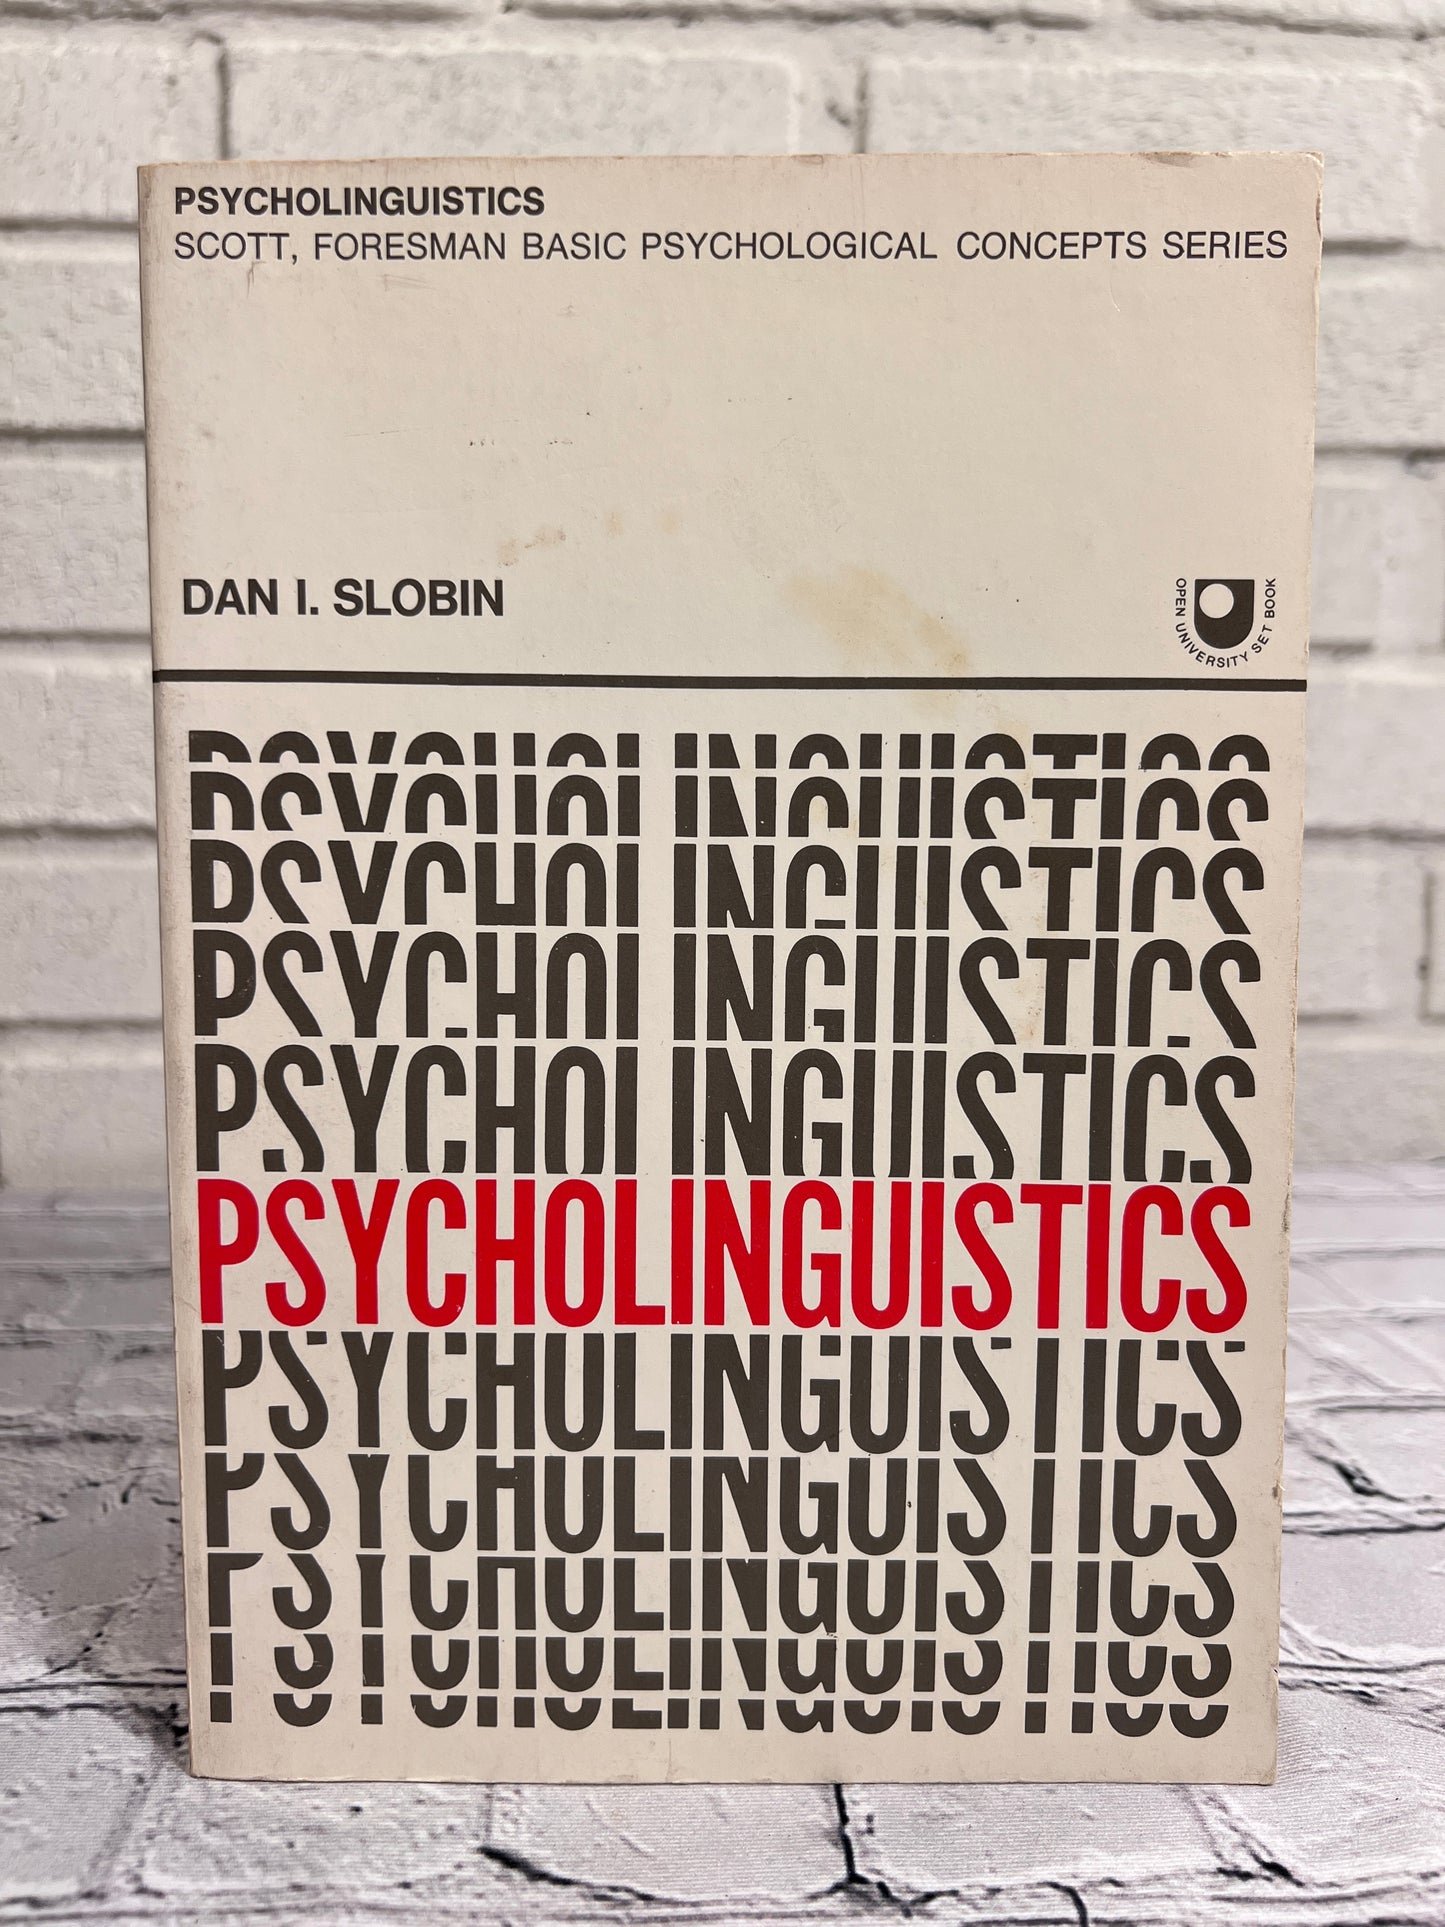 Psycholinguistics Scott, Foresman Basic Psychological Concept Series by Dan I. Slobin [1974]